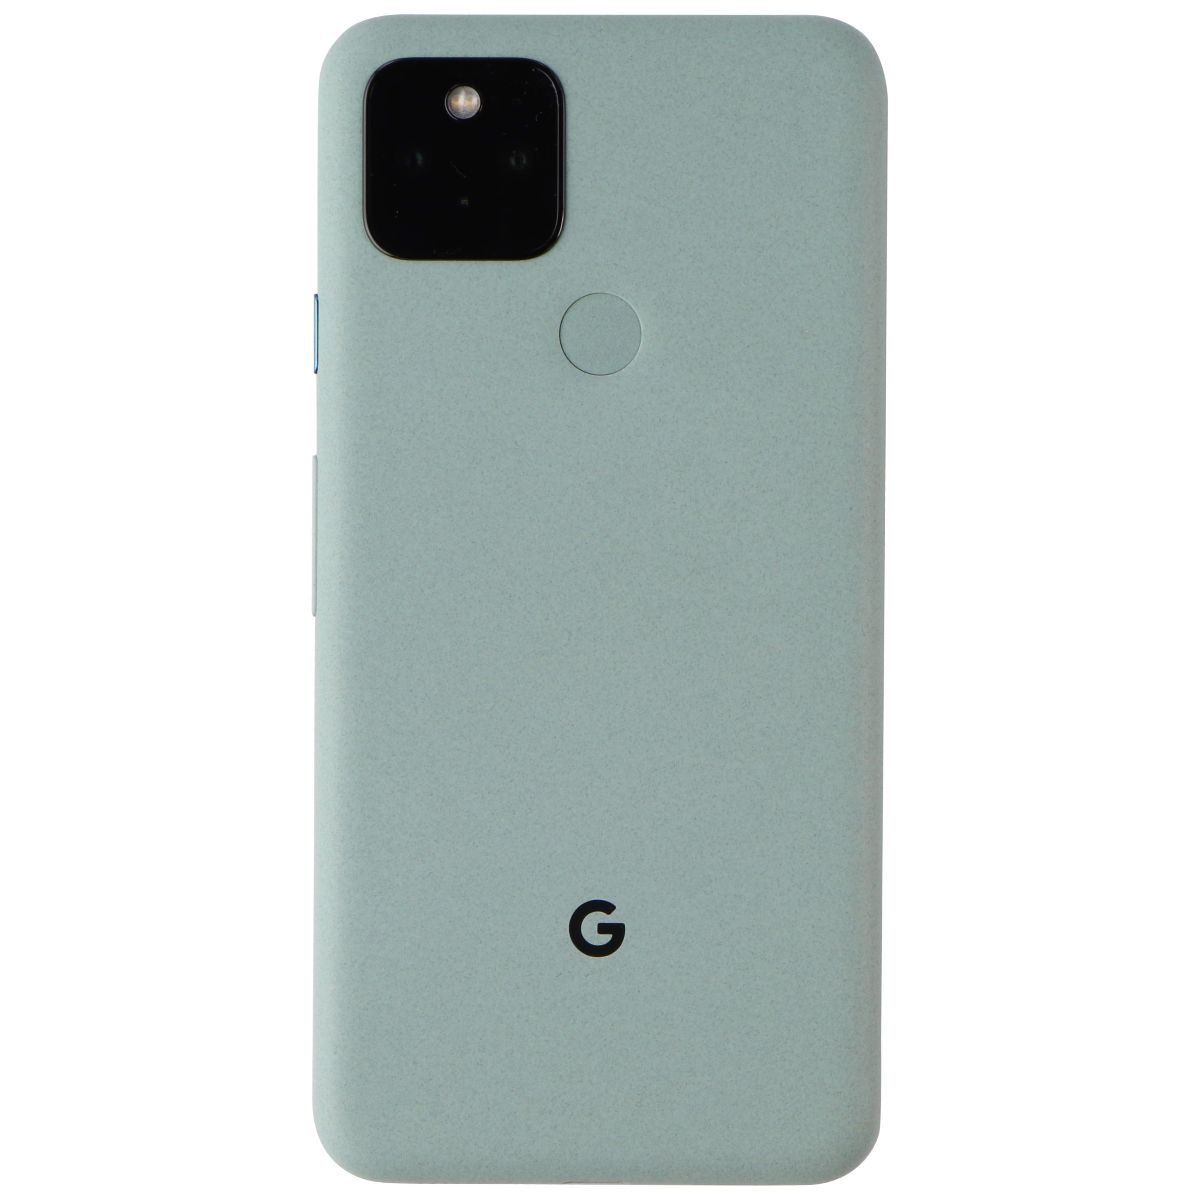 Google Pixel 5 (6-inch) Smartphone (GD1YQ) Verizon - 128GB / Sorta Sage Cell Phones & Smartphones Google    - Simple Cell Bulk Wholesale Pricing - USA Seller